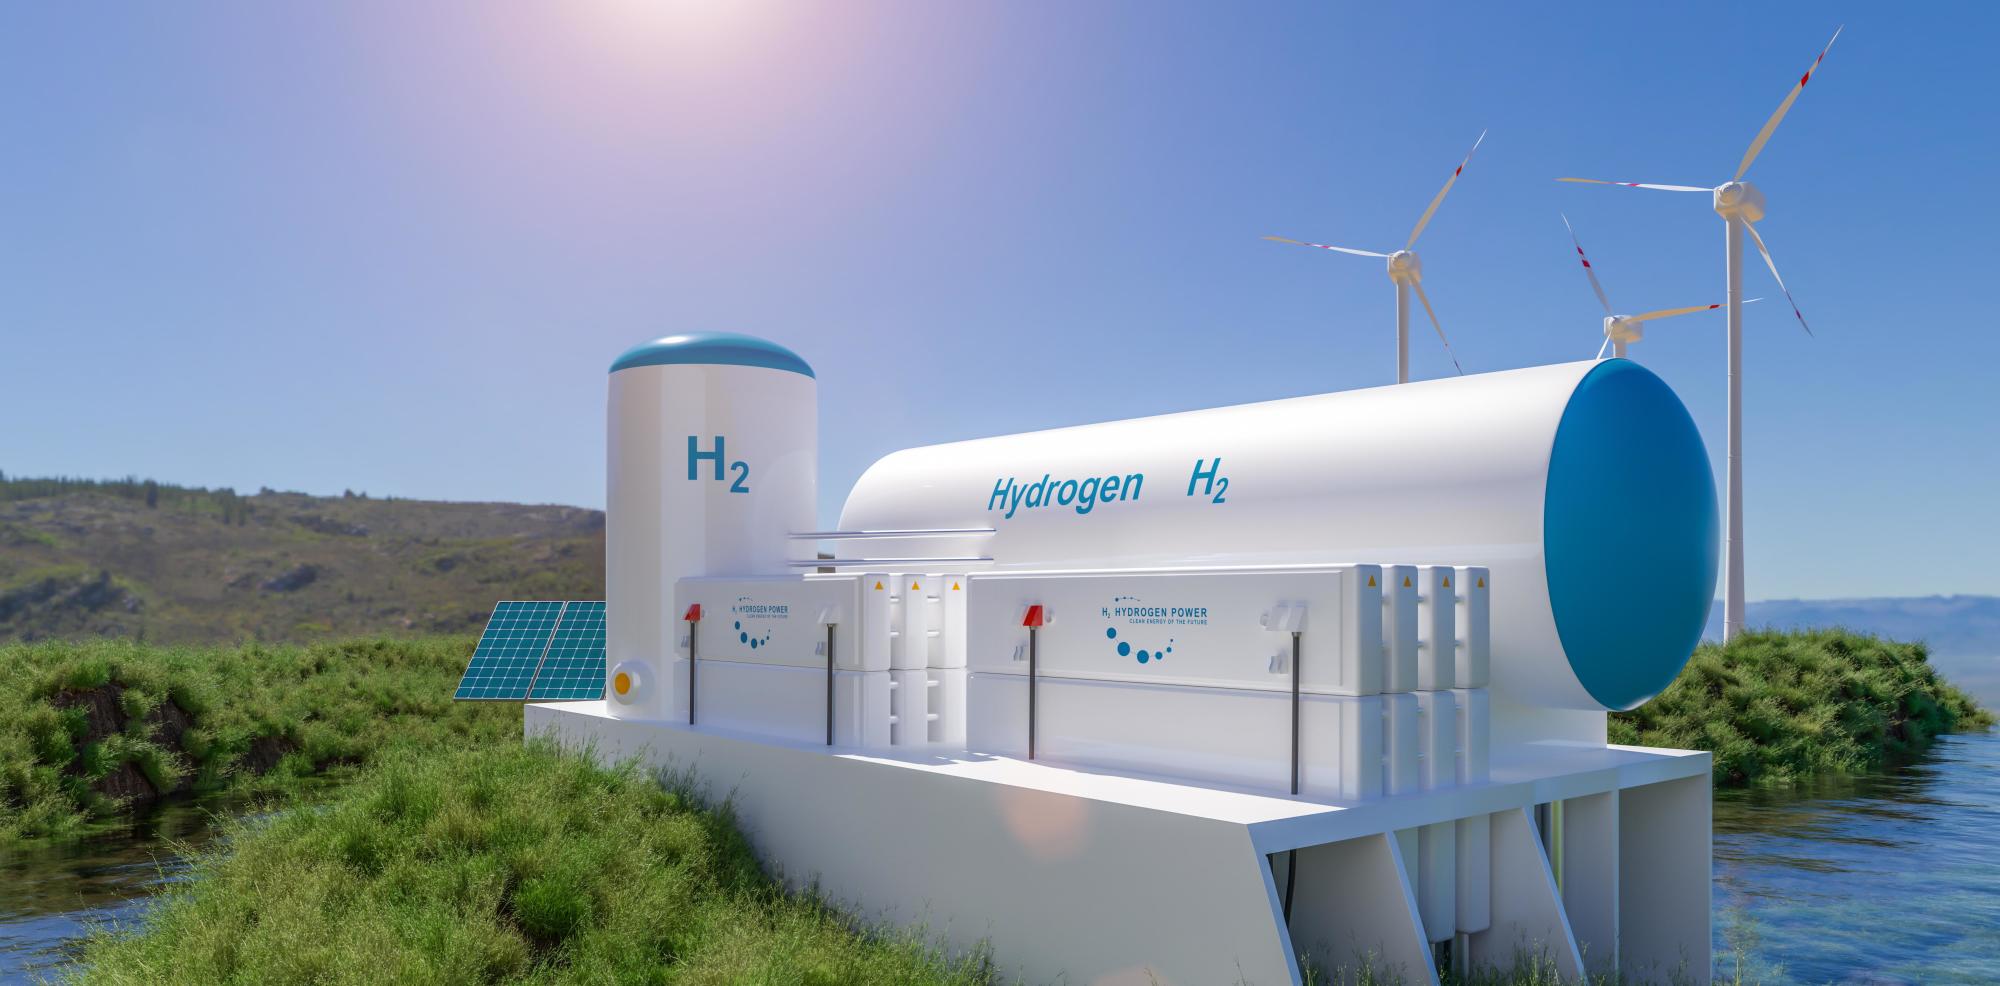 Hydrogen Power